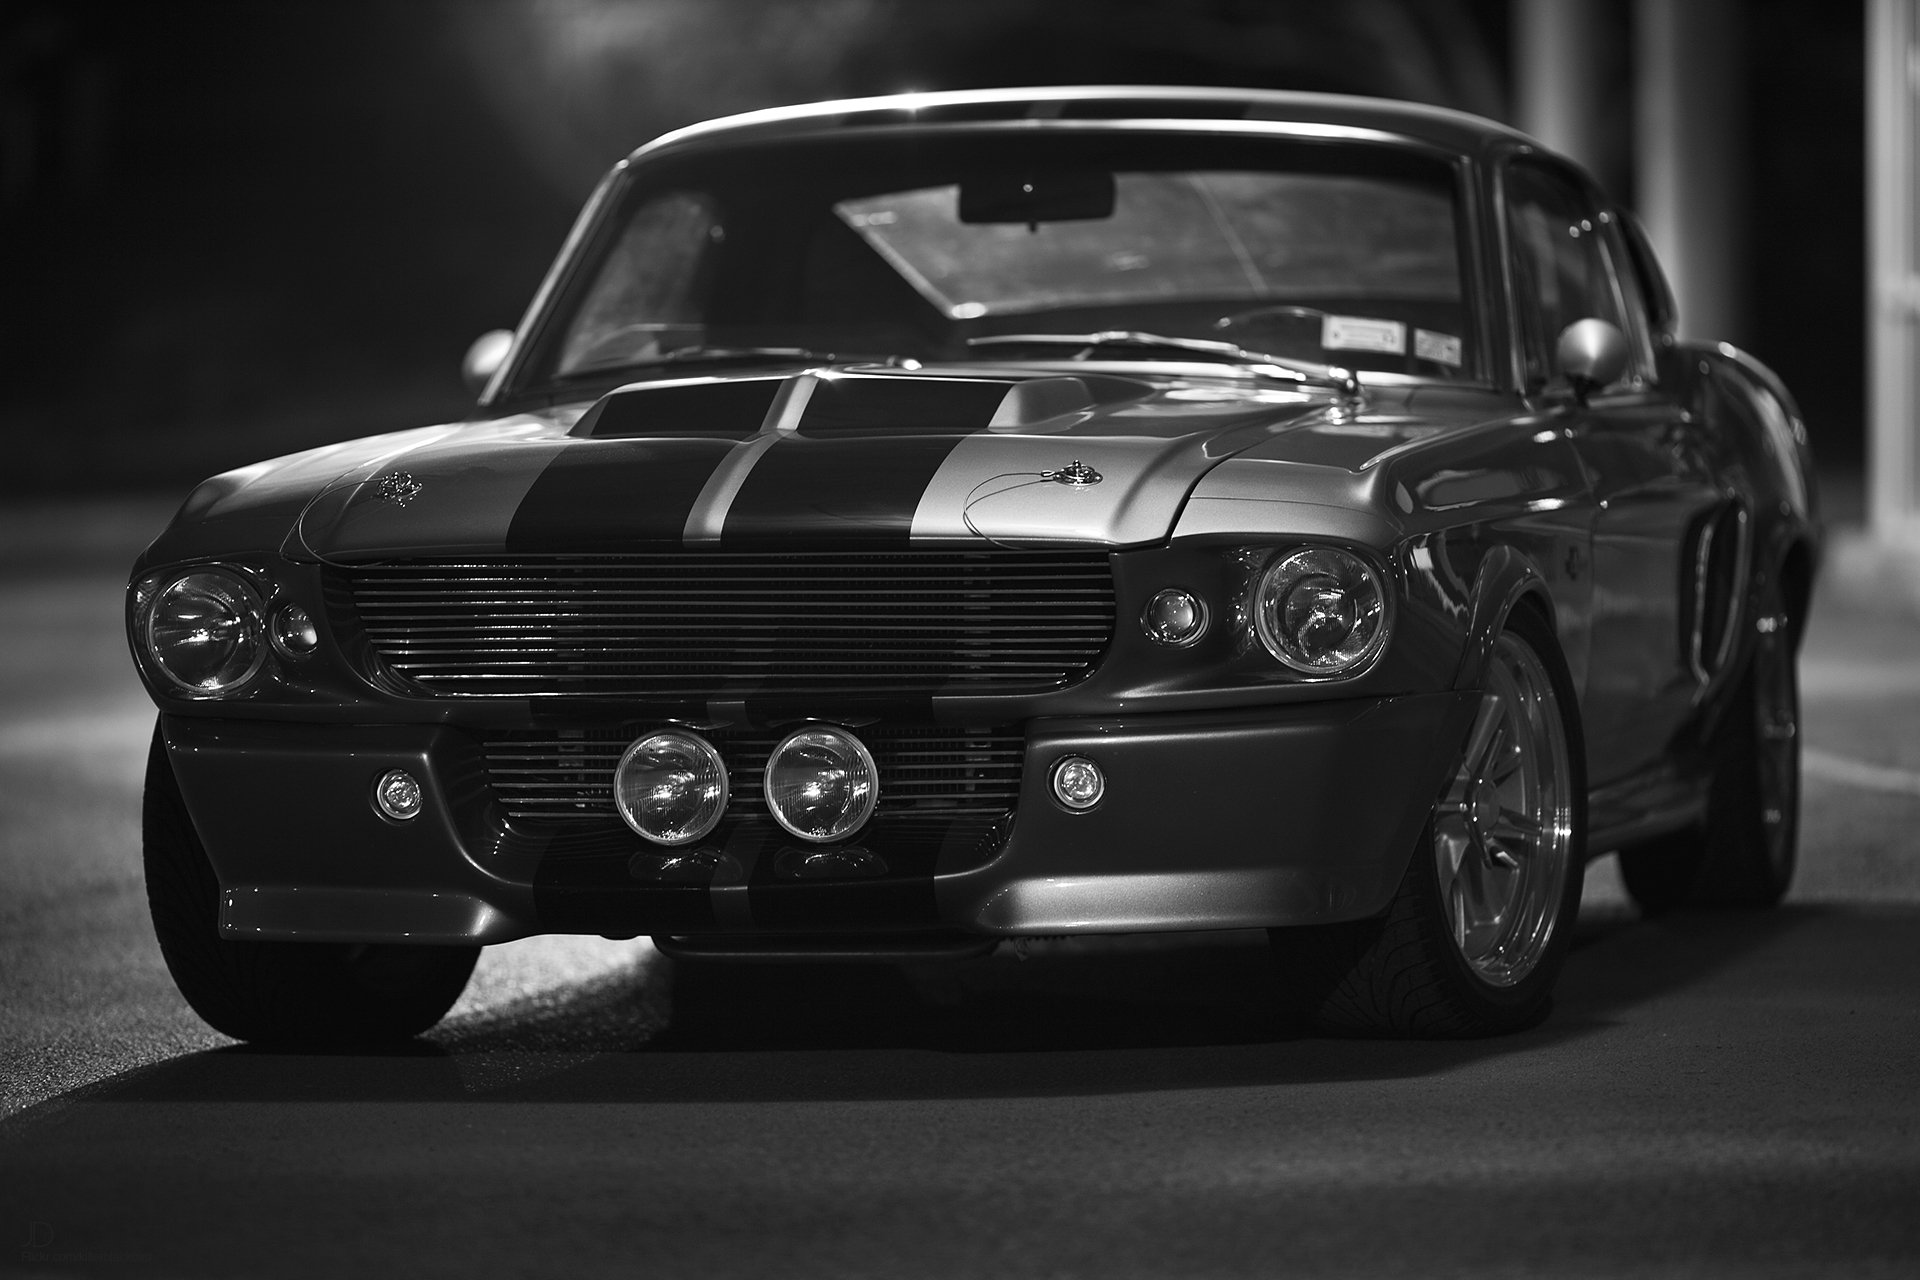 Ford Mustang (Форд Мустанг) - Продажа, Цены, Отзывы, Фото ...